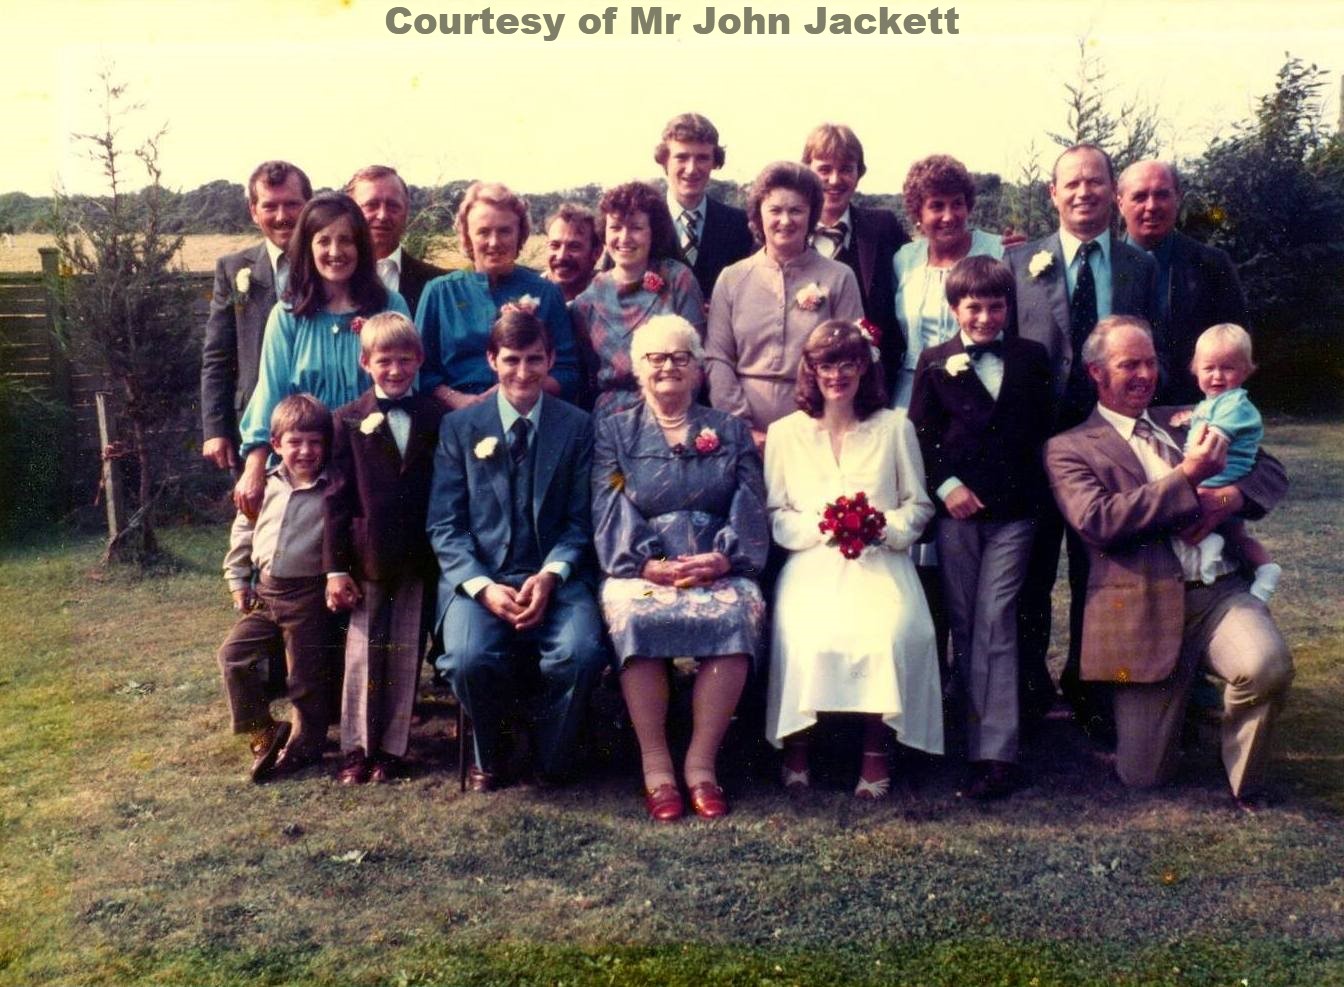 The wedding of Perranwell girl Rita Eley - 1981